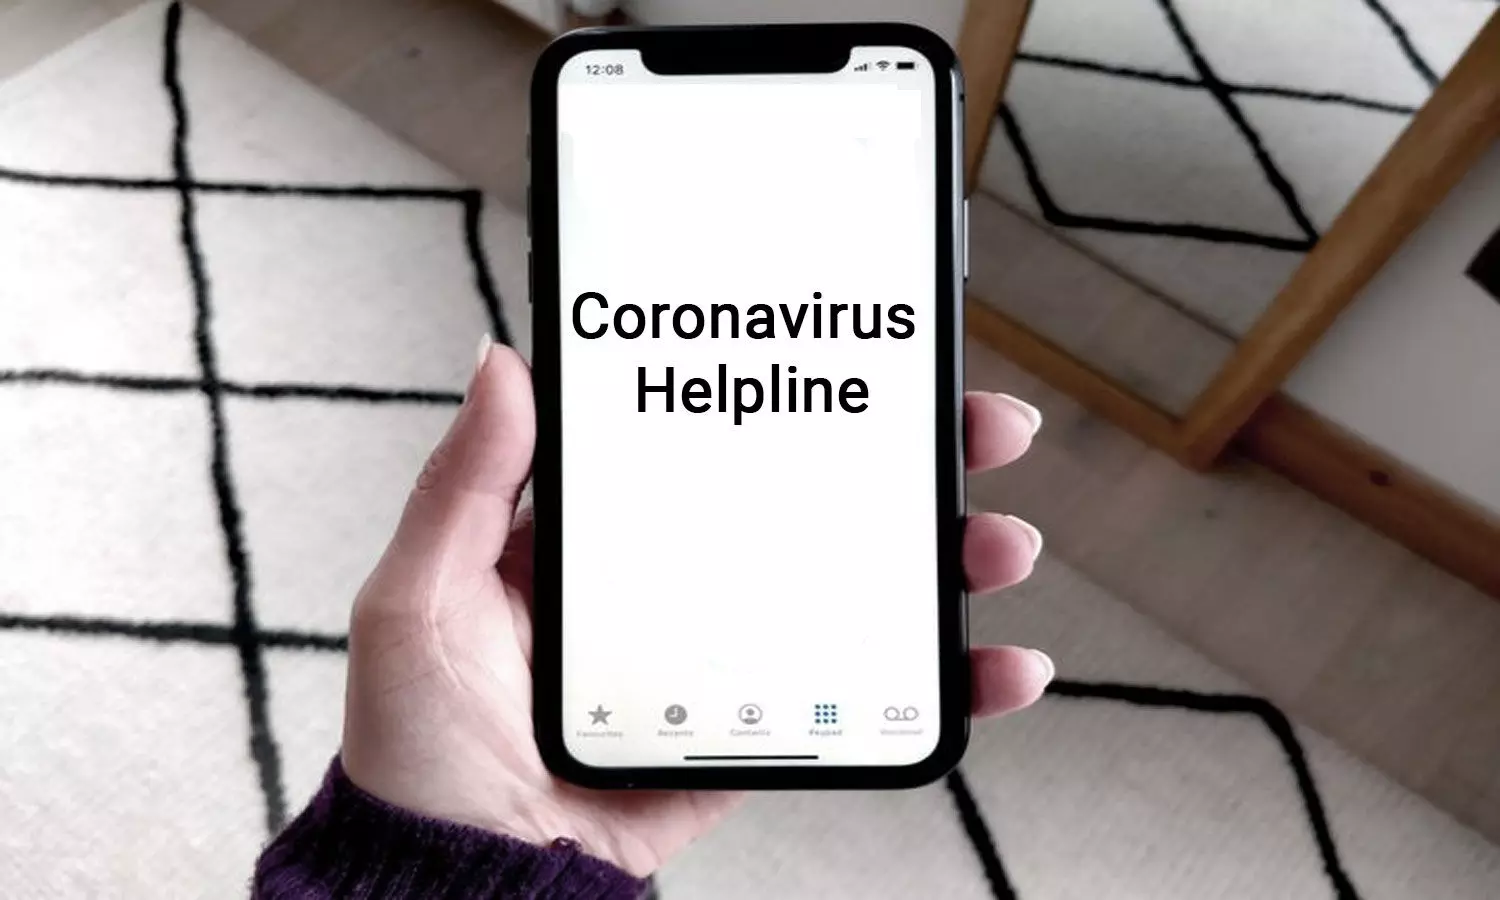 Dial 1075 to reach Health ministry toll-free helpline on coronavirus